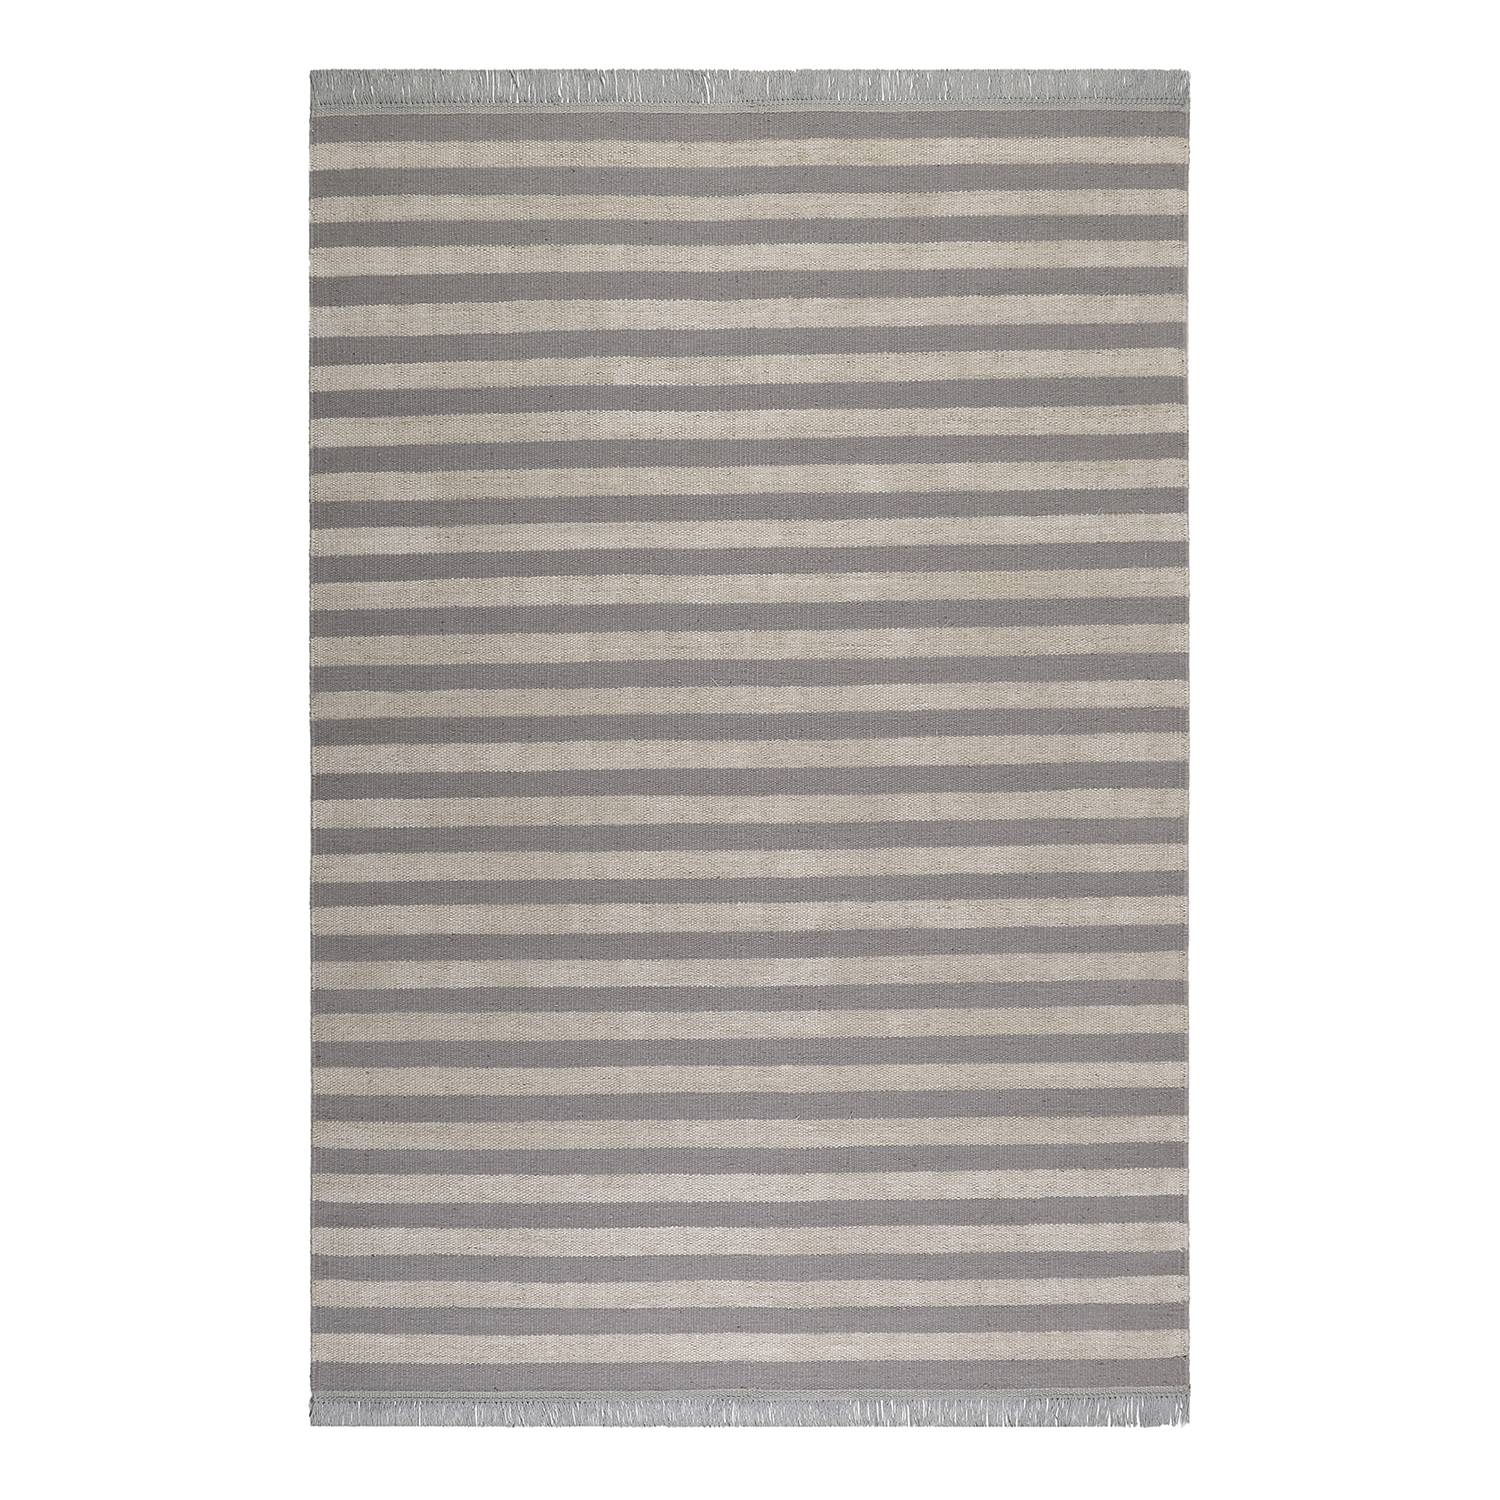 Teppich Noble Stripes (handgewebt) - Mischgewebe - Grau / Creme - 130 x 190 cm, carpets&co